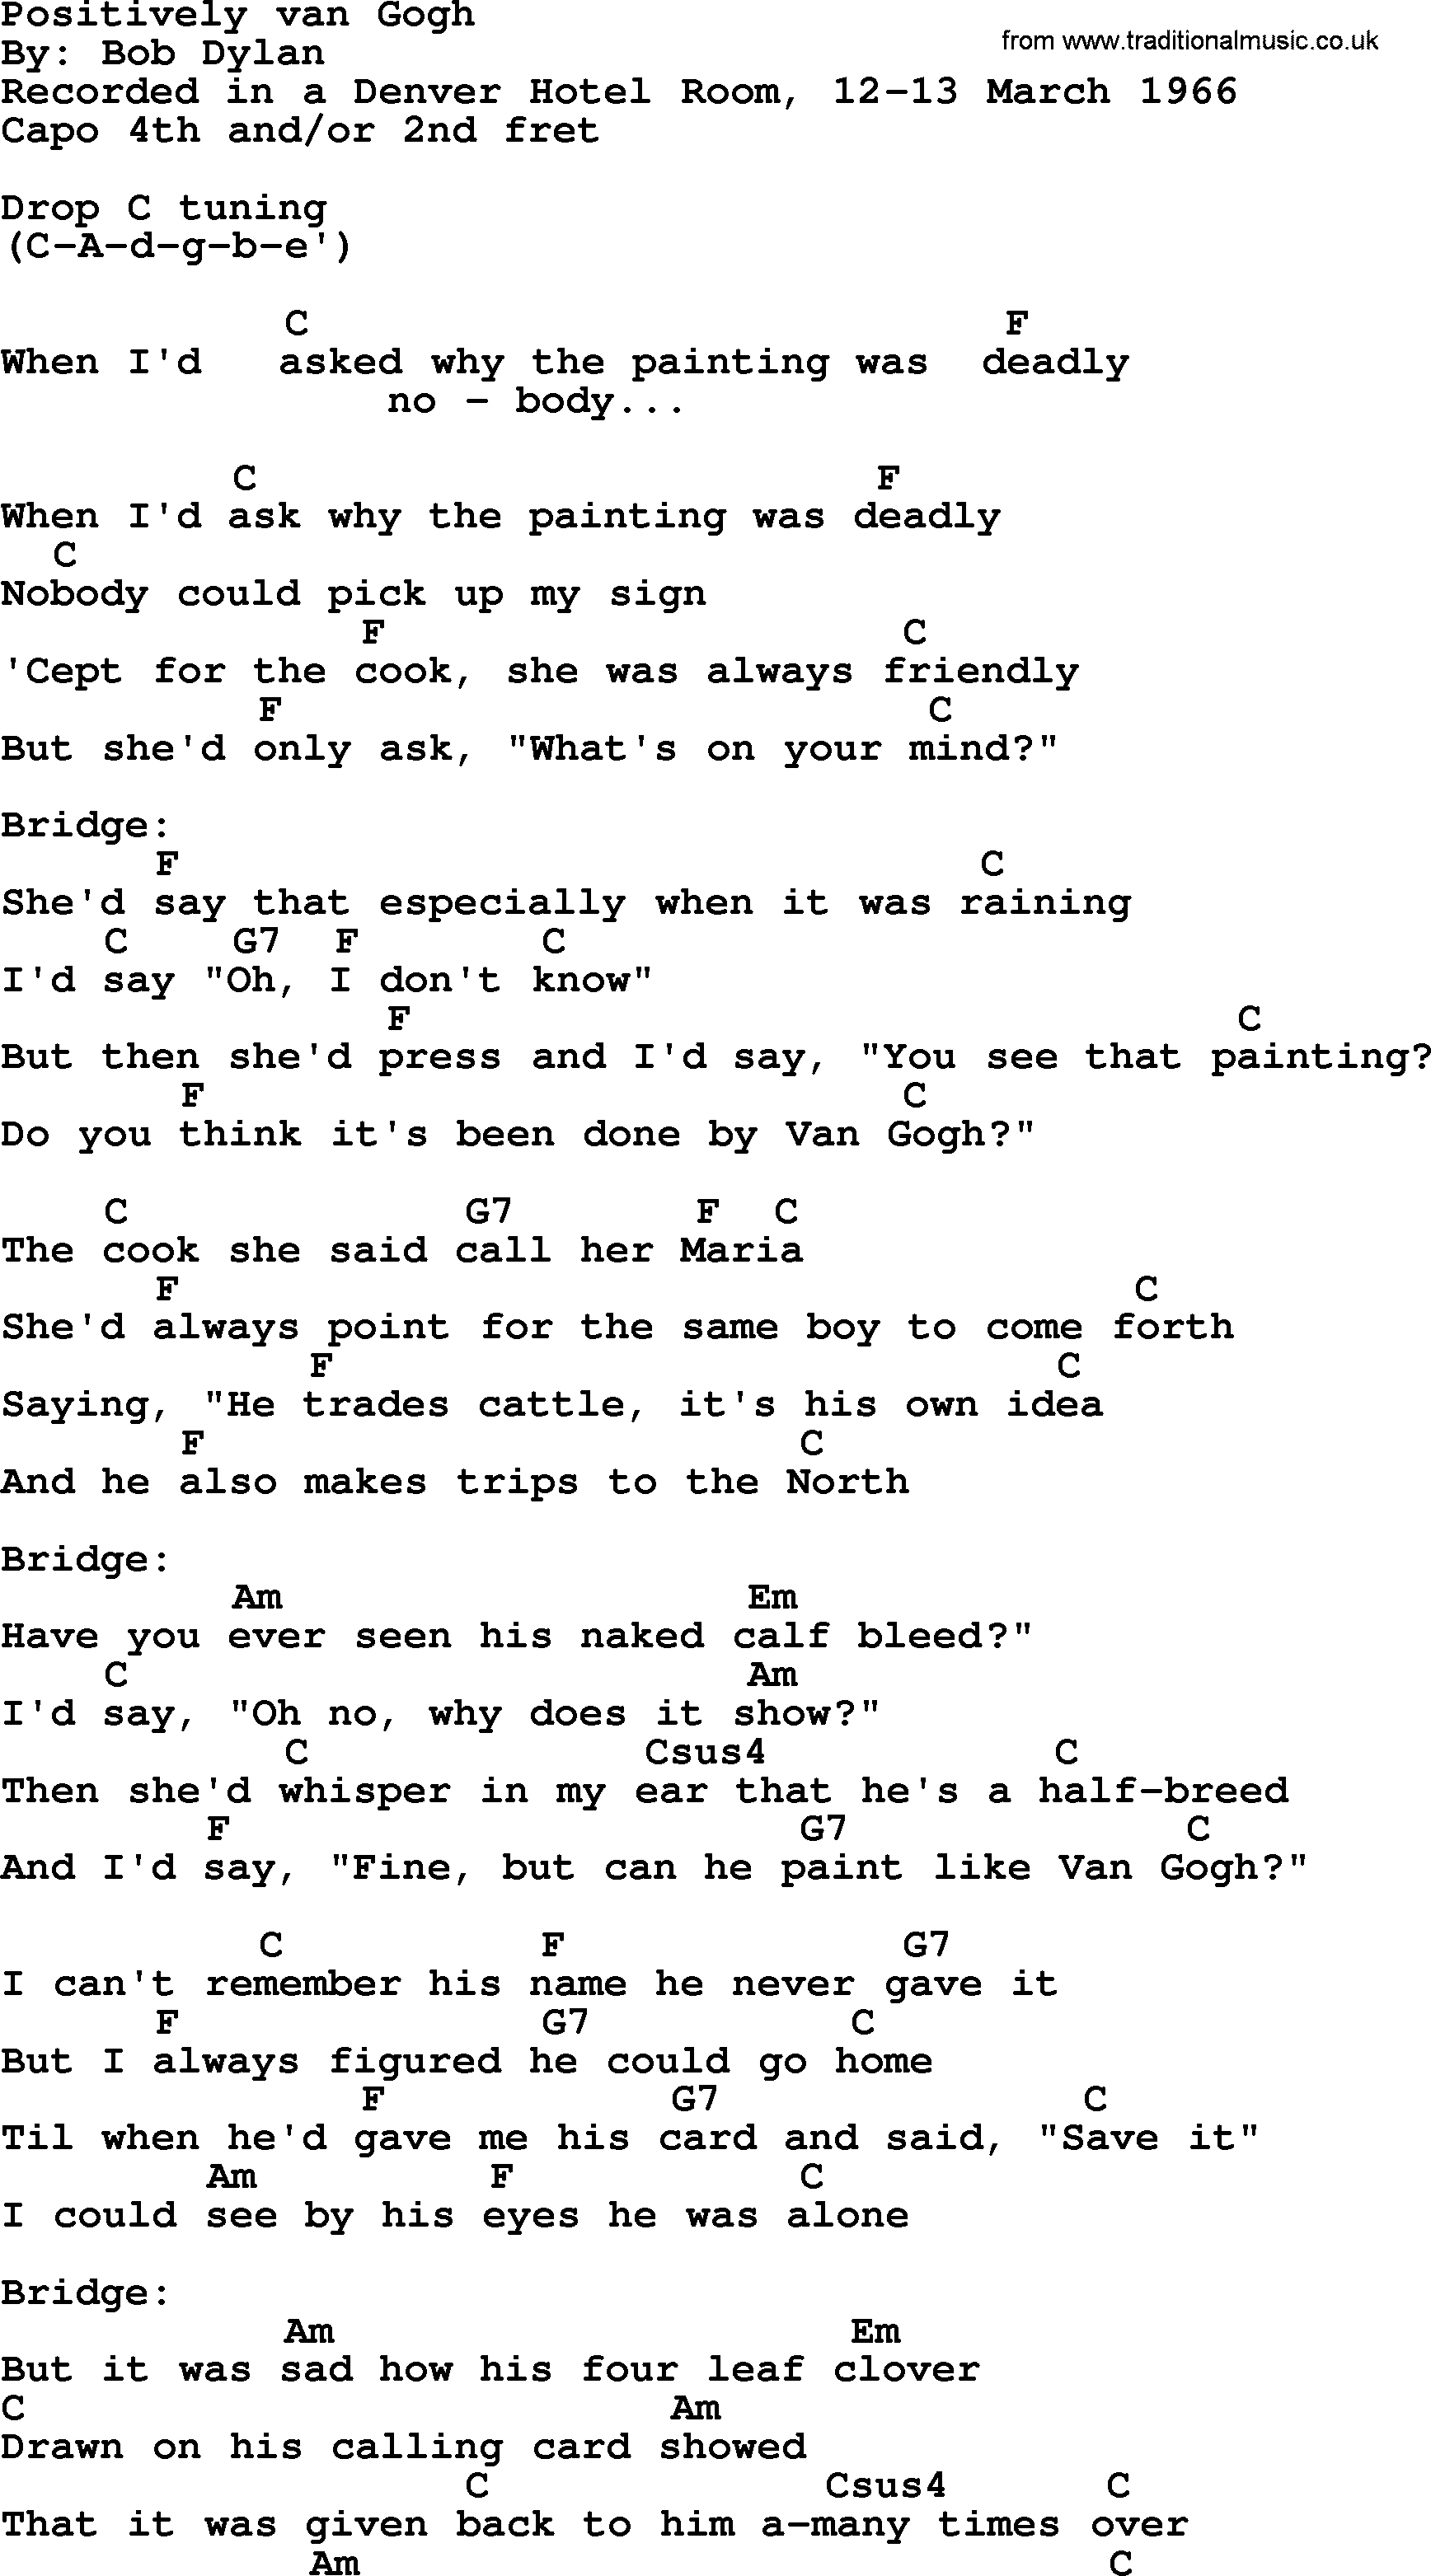 Bob Dylan song, lyrics with chords - Positively van Gogh